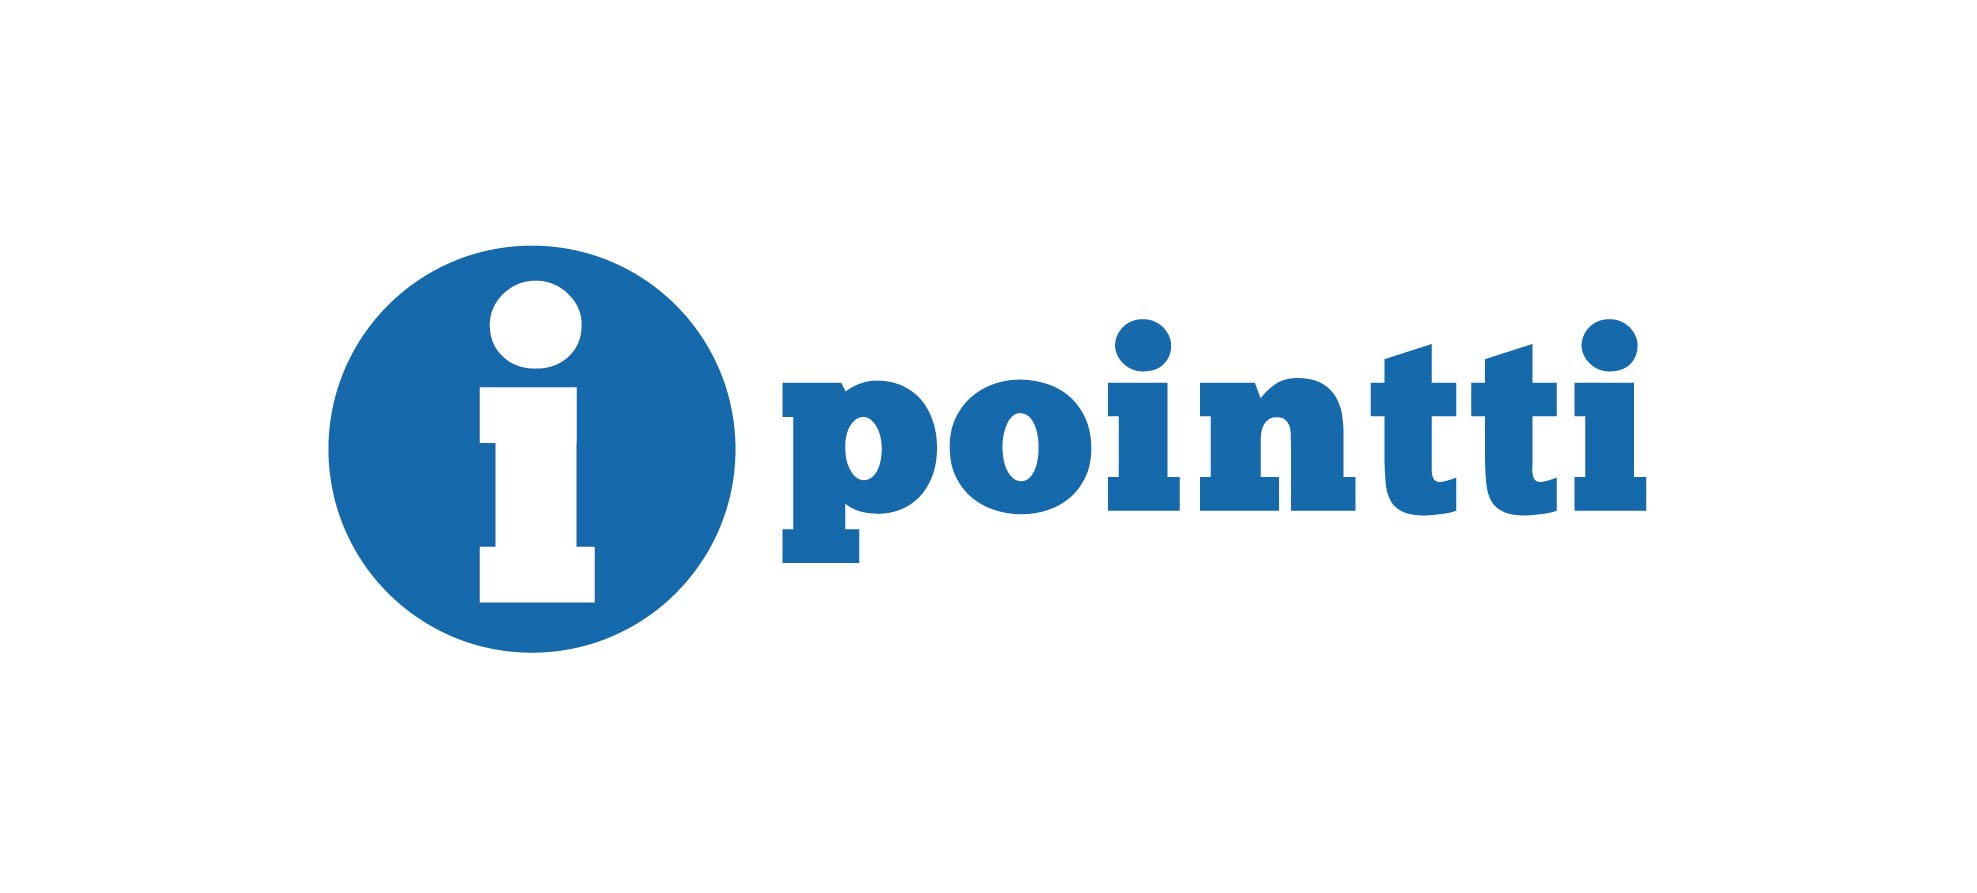 i-pointti_logo-01.jpg